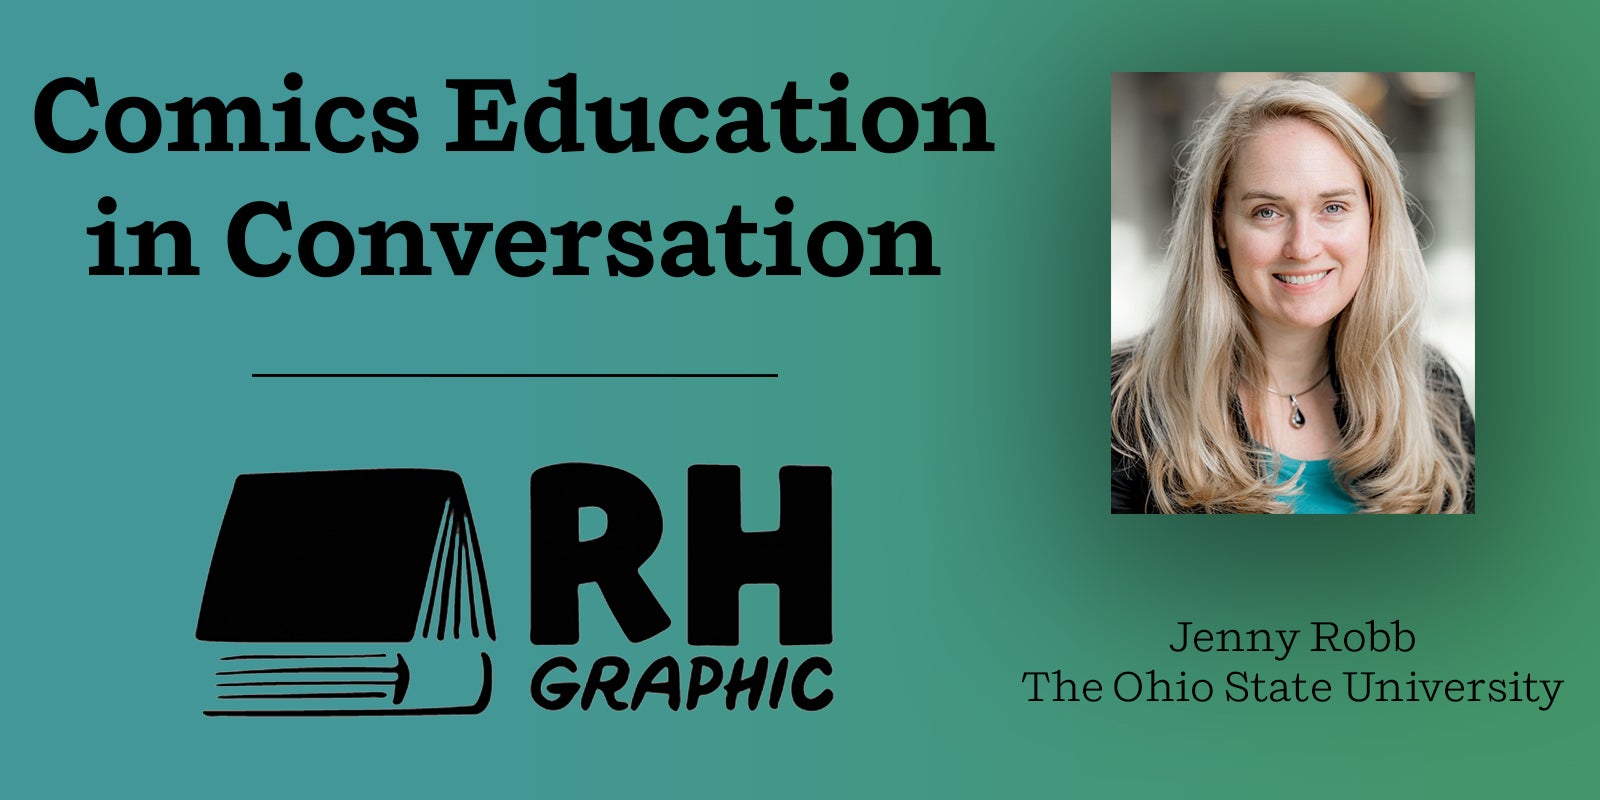 Comics Education in Conversation: Jenny Robb